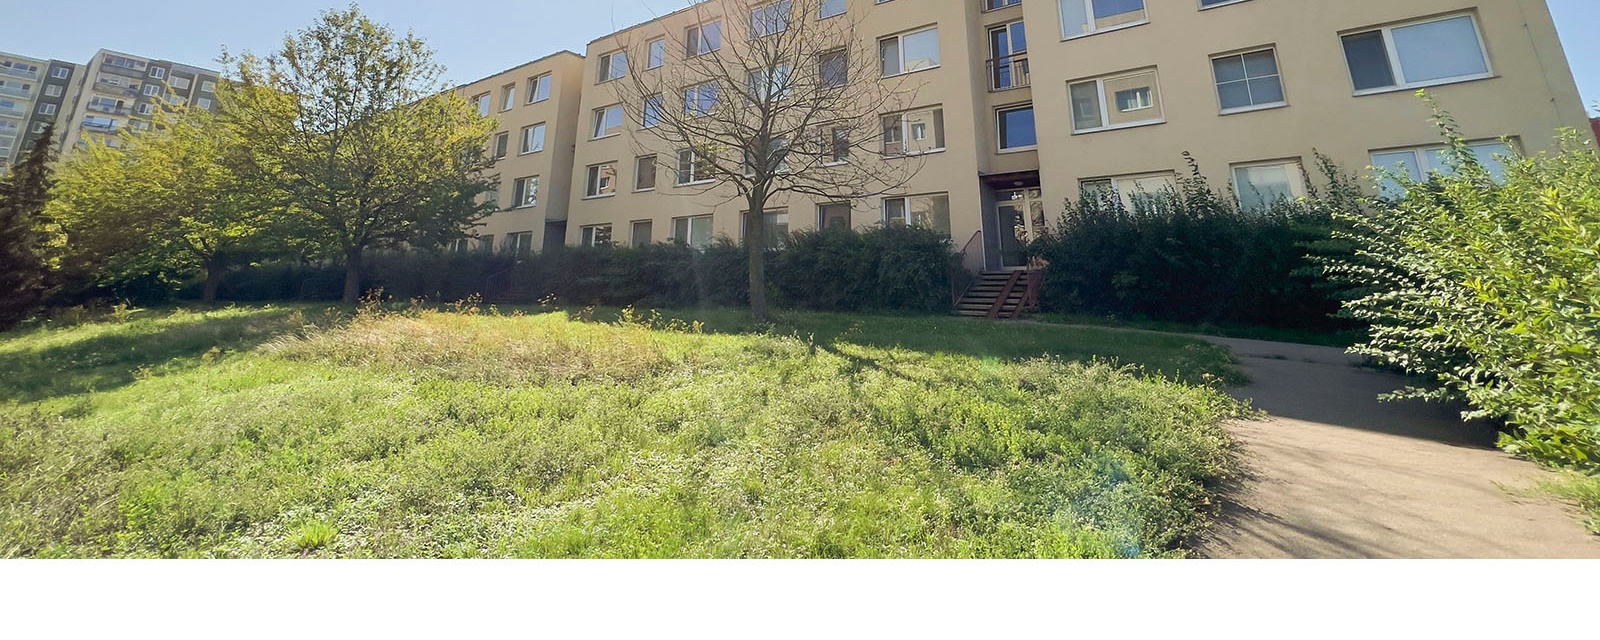 Byt 4+1 s prostornou lodžií na prodej, 90m² - Brno - Židenice